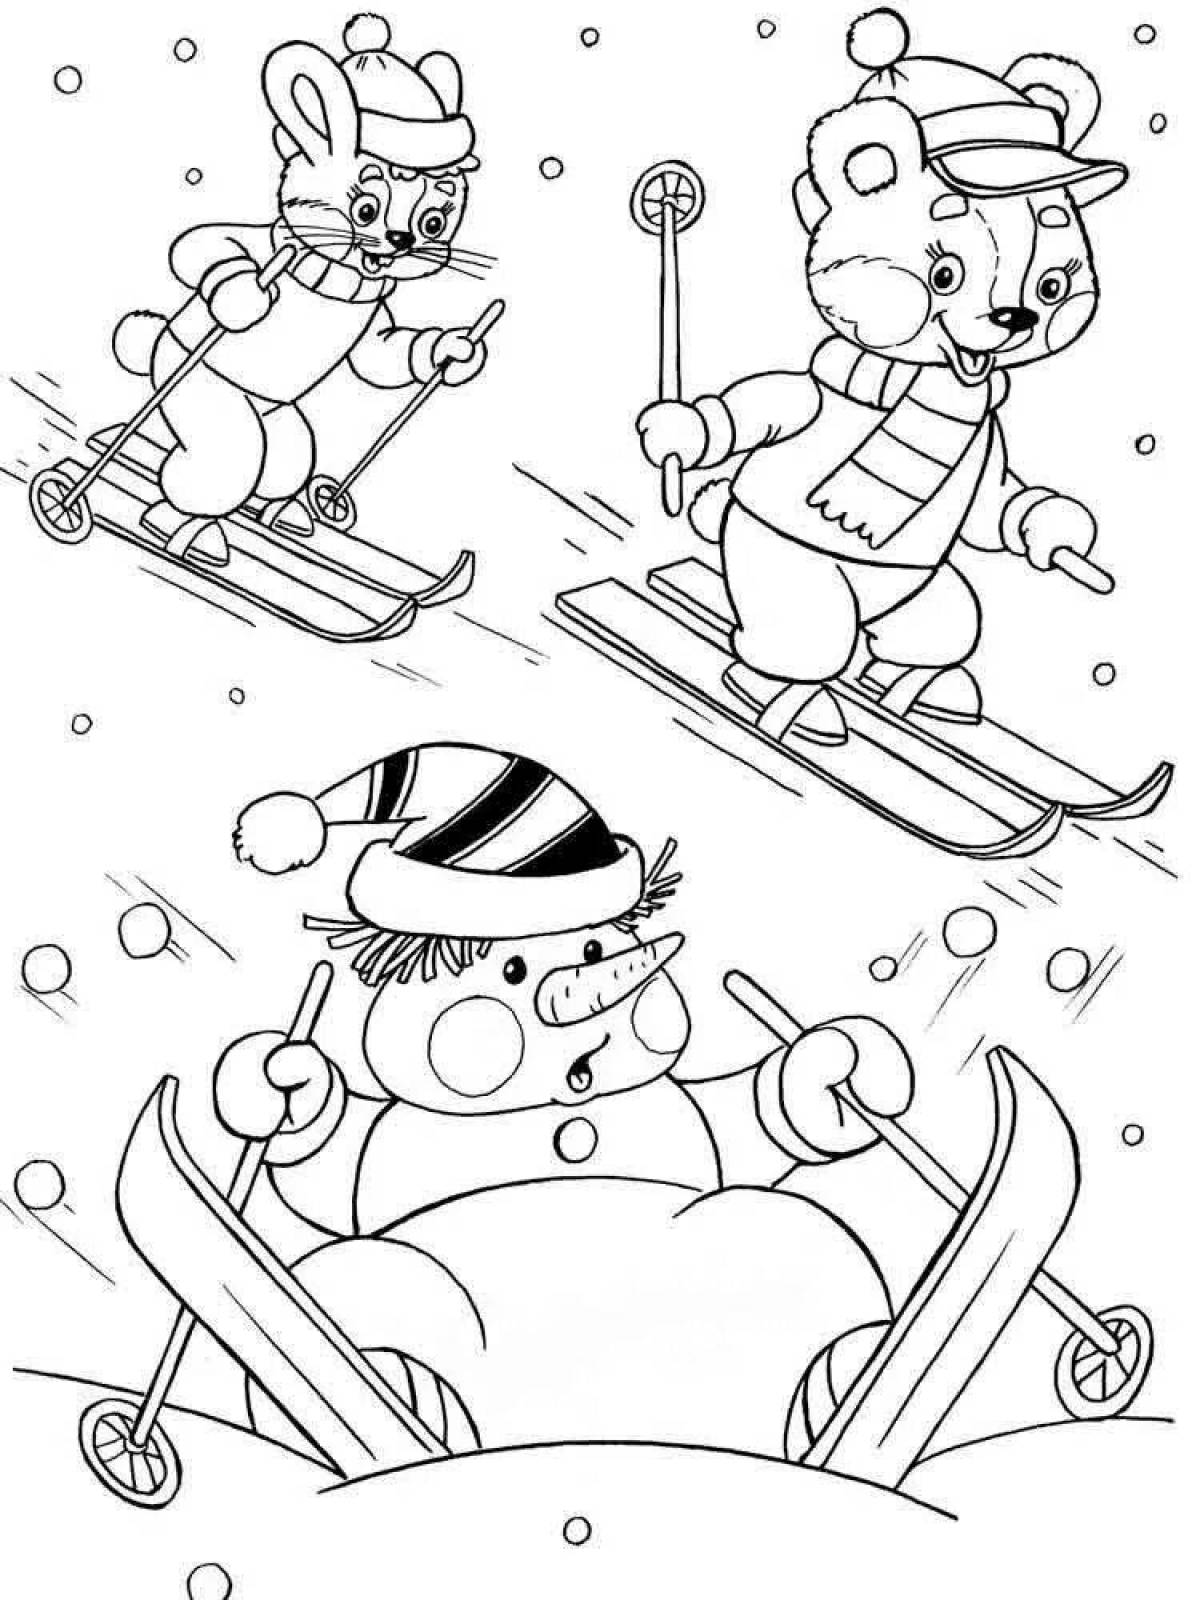 Snowman on skis #16